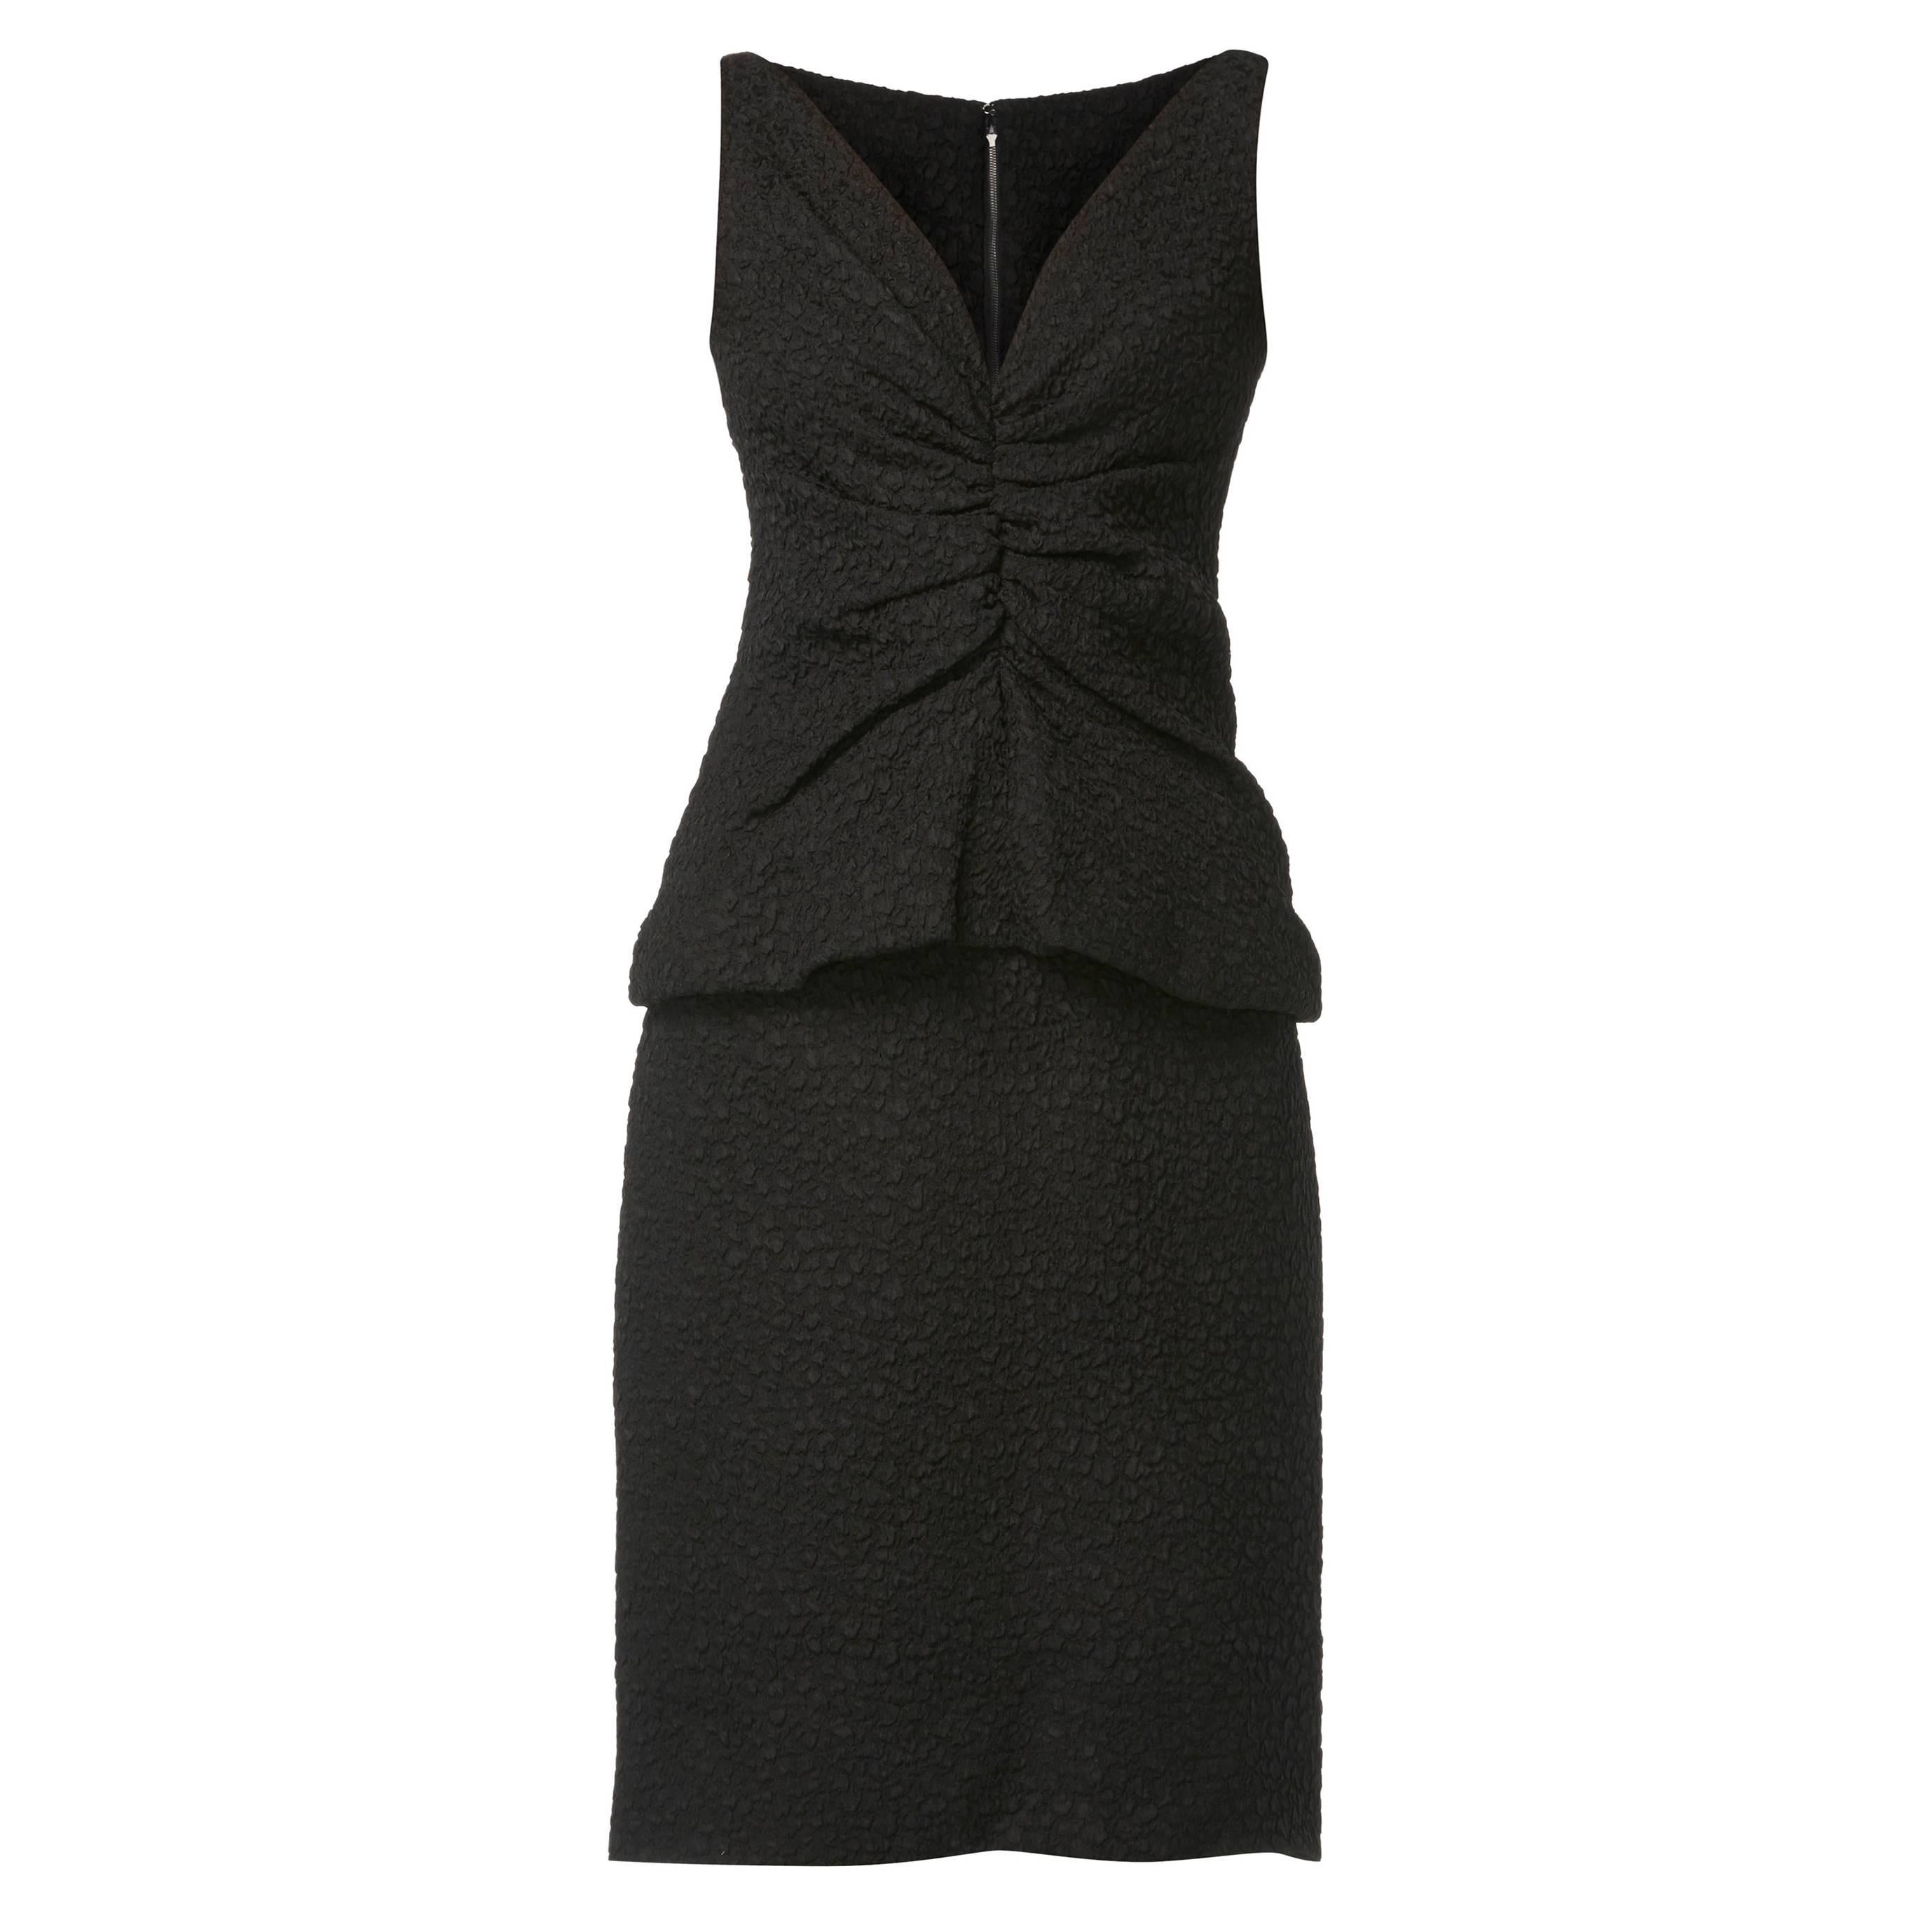 Dior haute couture black dress, Autumn/Winter 1959 For Sale